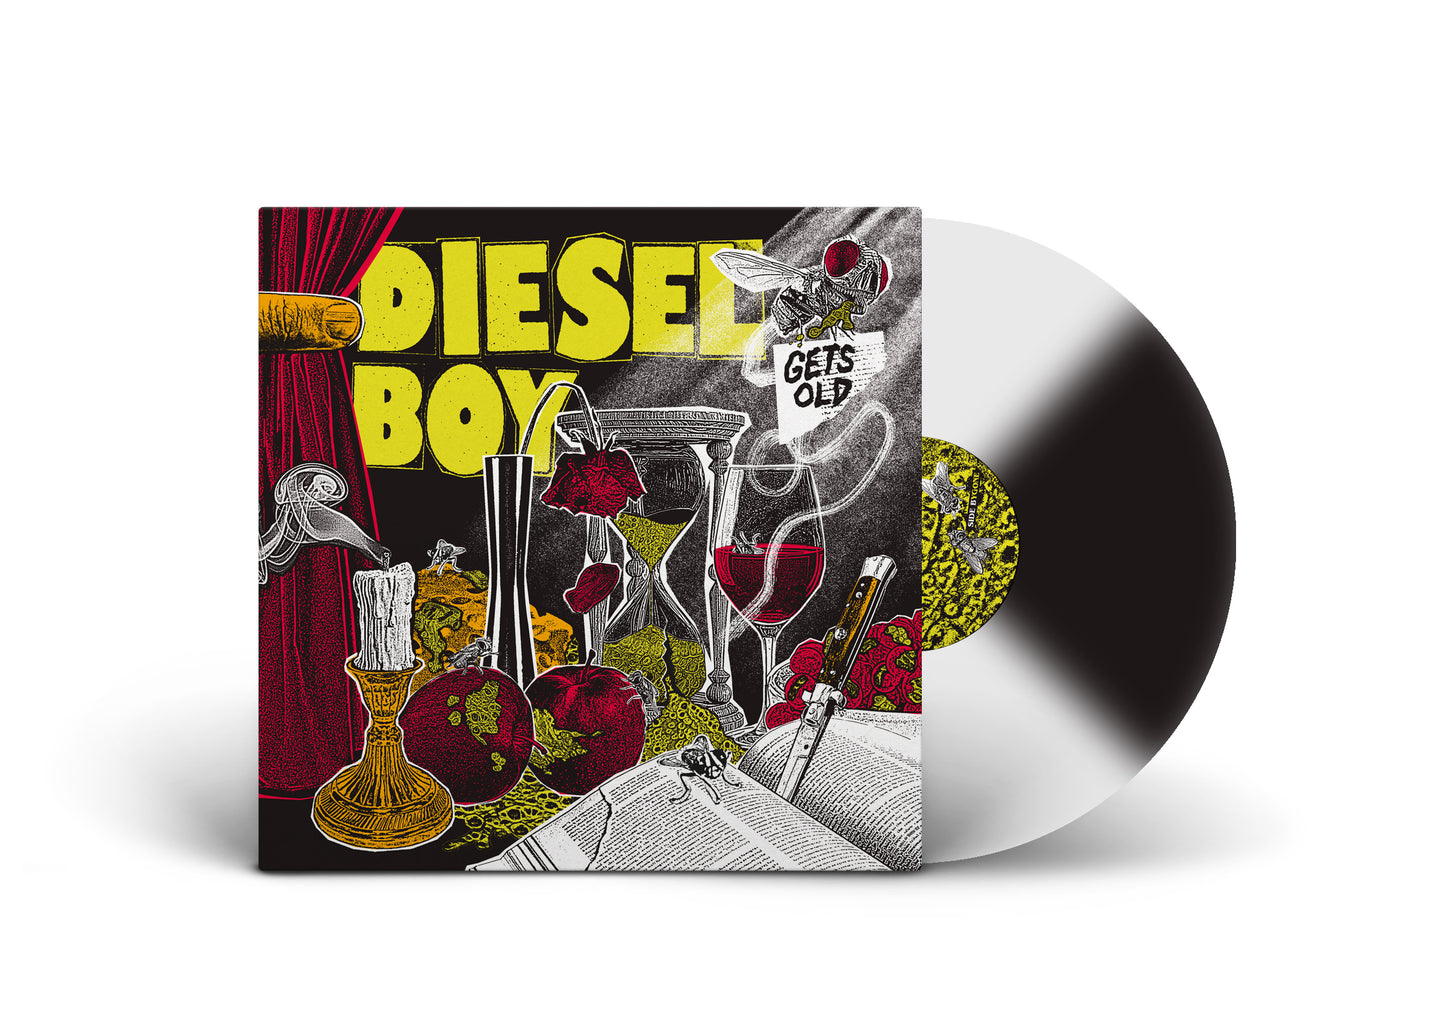 DIESEL BOY - "Gets Old" (SBAM) (CD/LP)